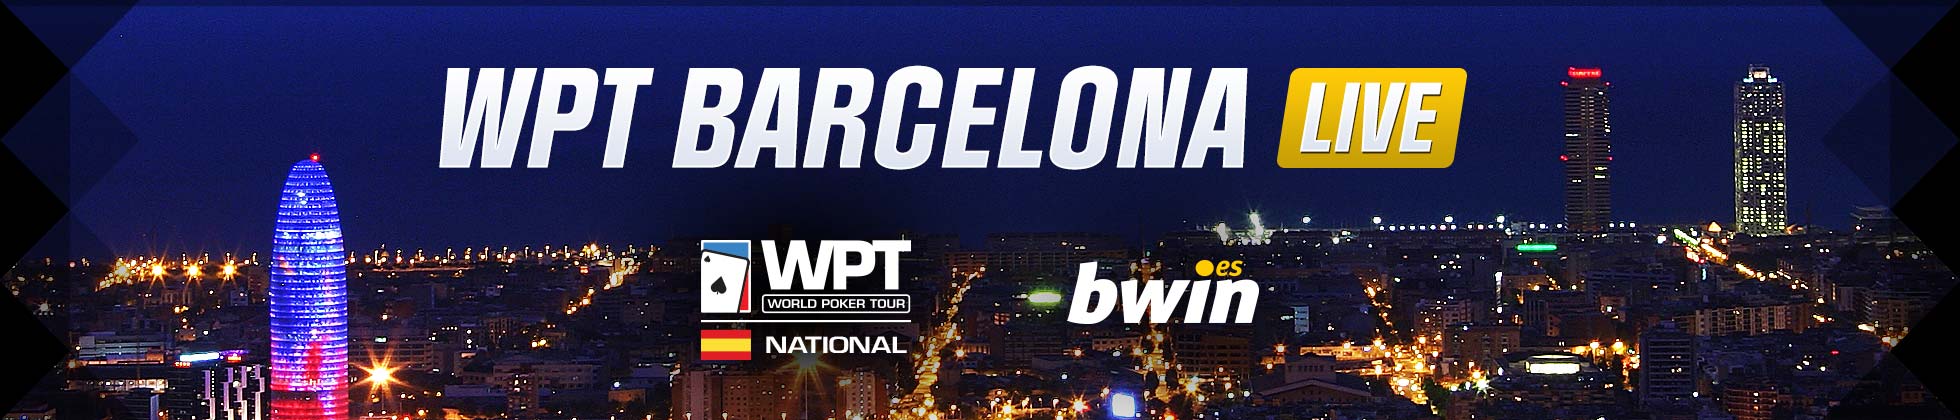 bwin WPT National Barcelona 2013